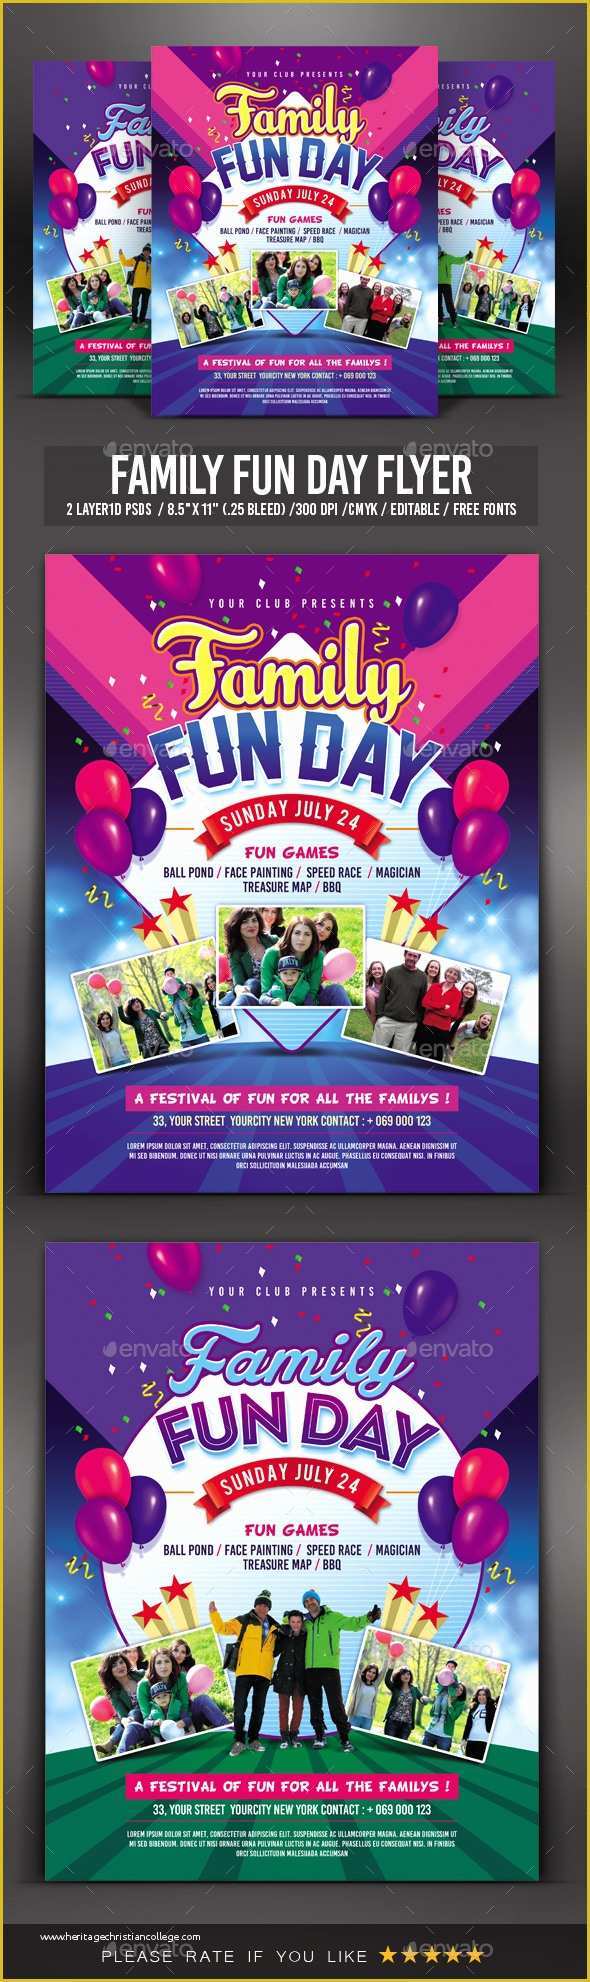 Fun Day Flyer Template Free Of Family Fun Day Flyer Psd Templates Template and Templ and